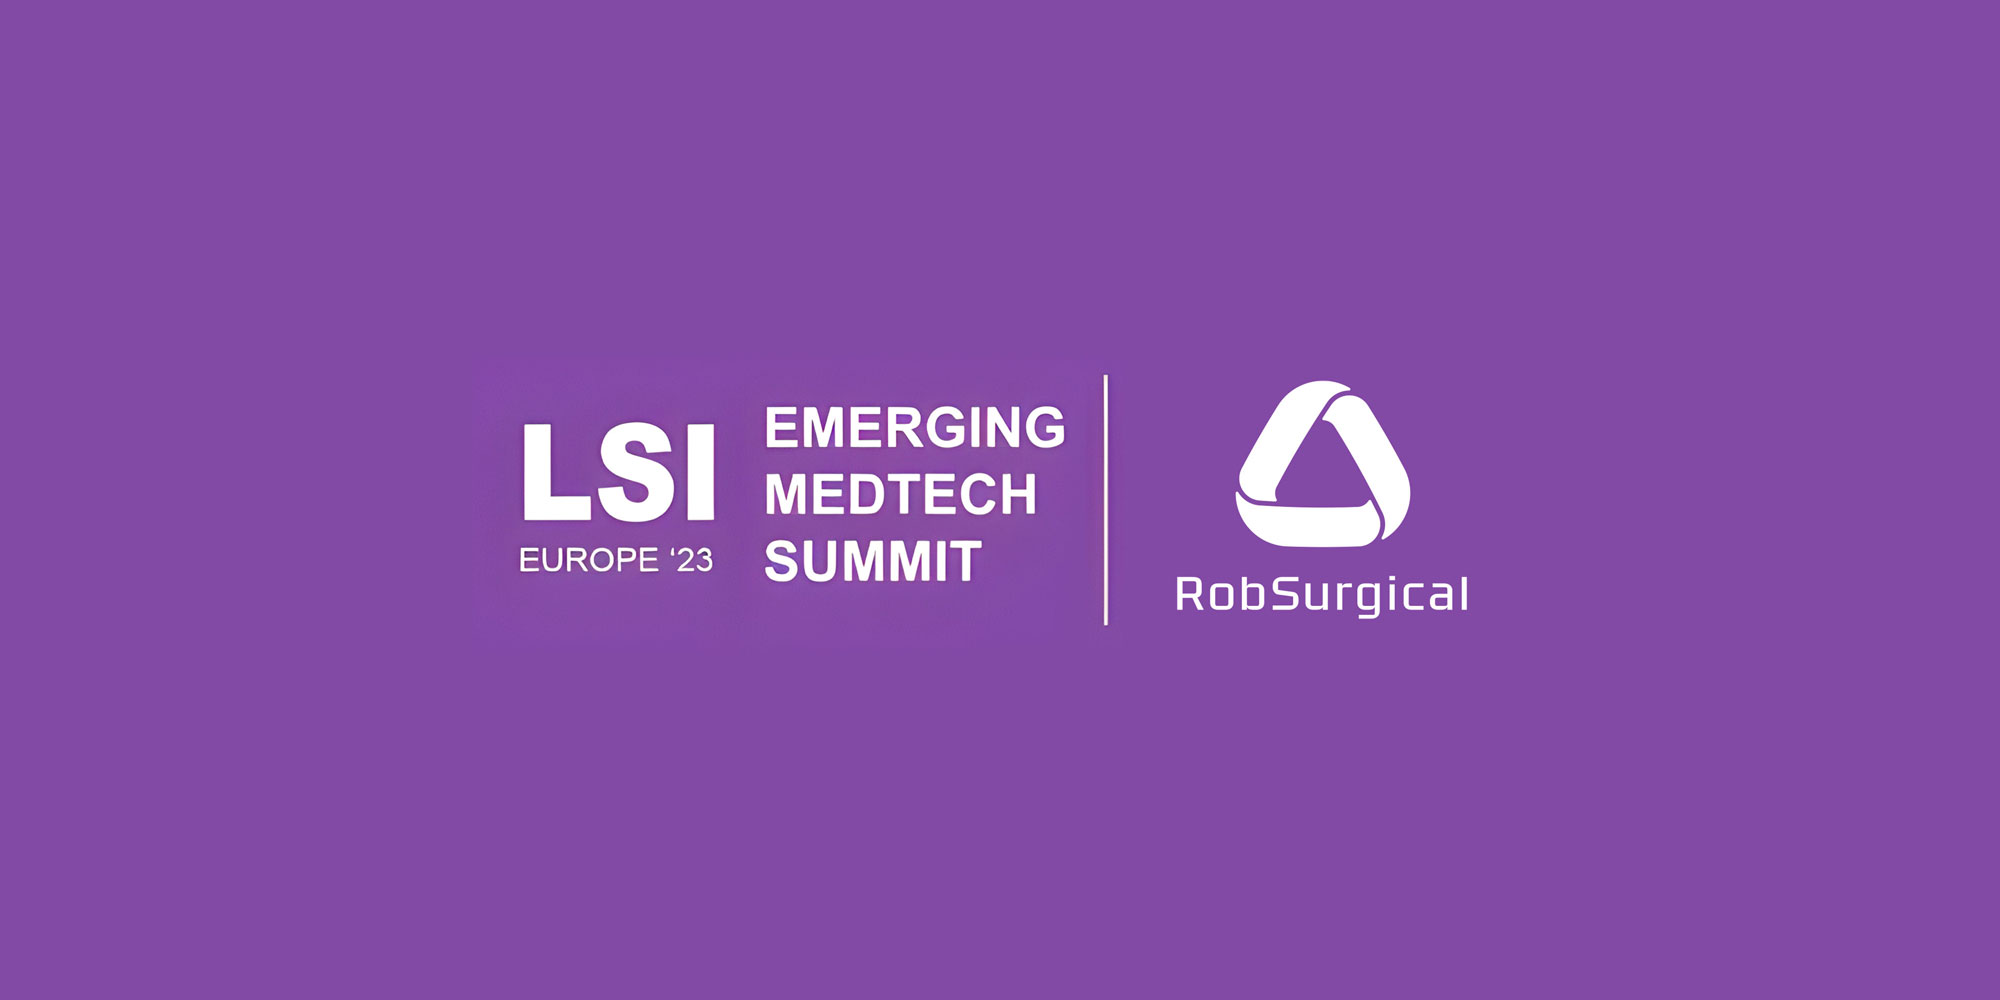 LSI Emerging medtech summit